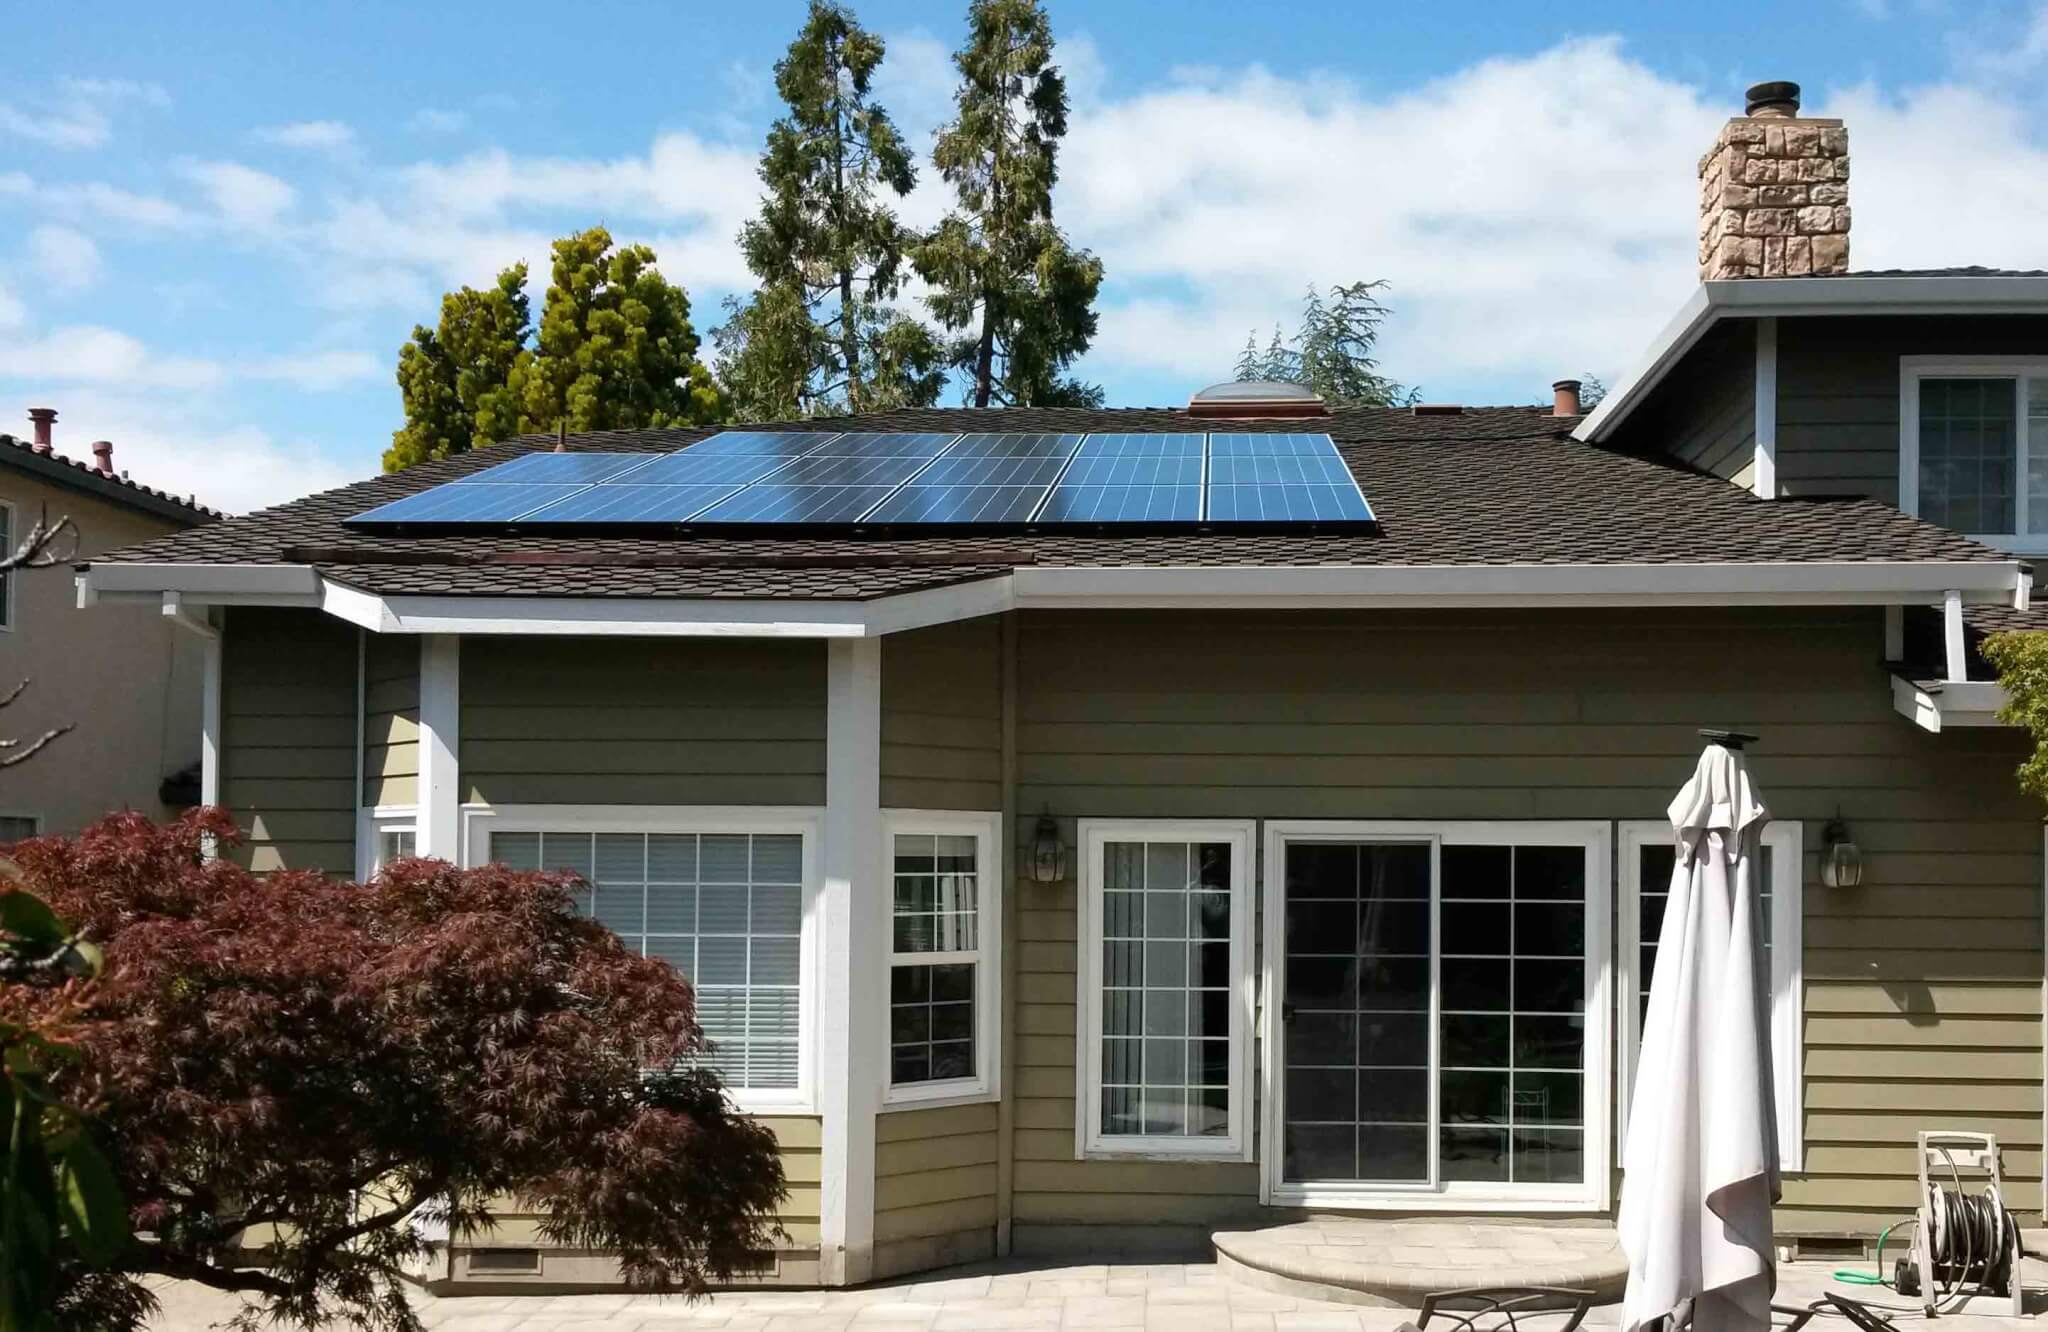  Home Solar & Energy Storage